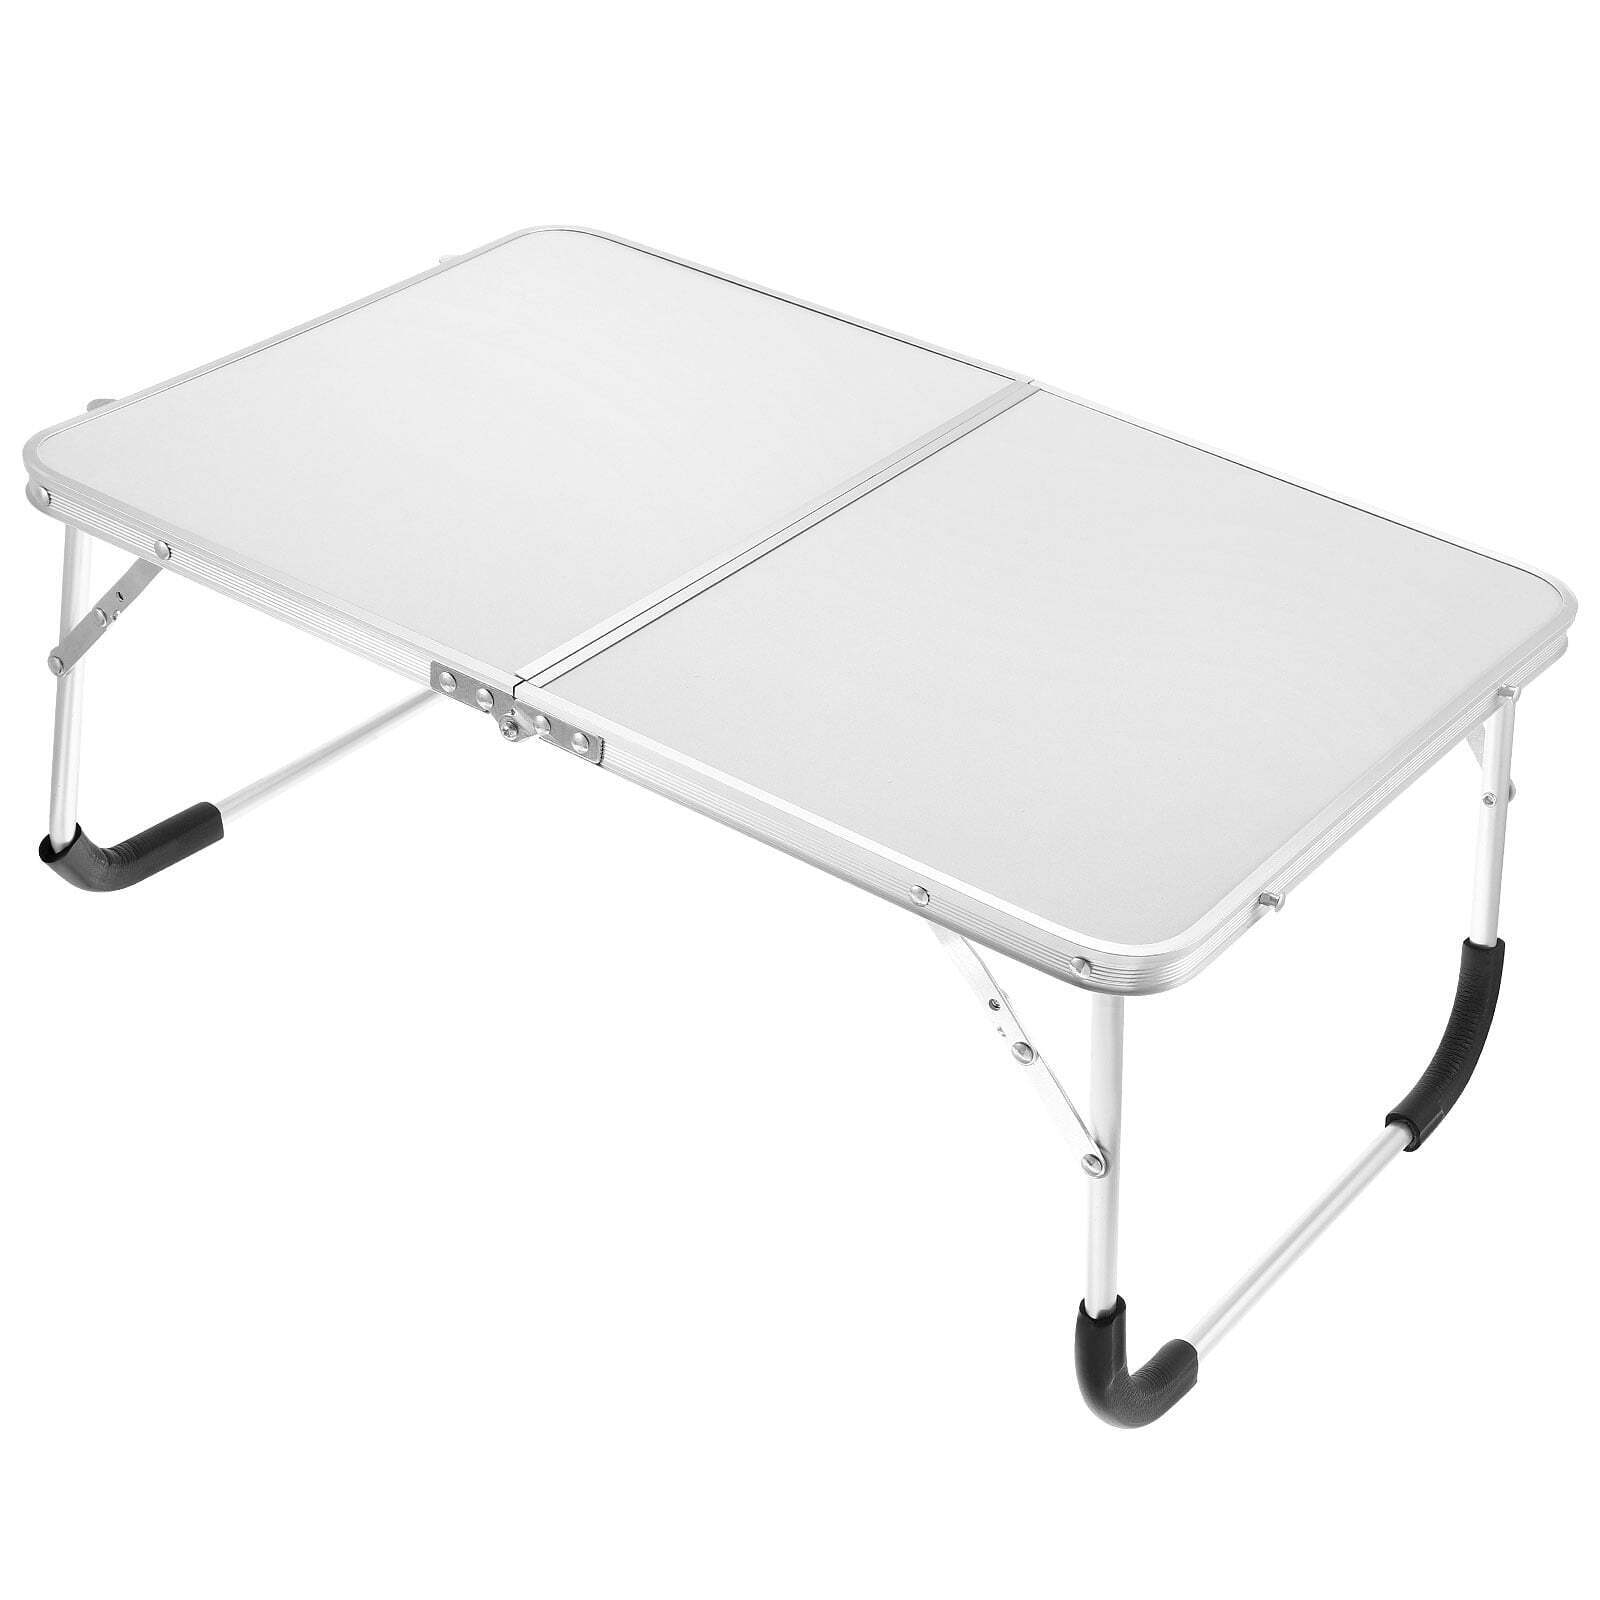 Foldable Laptop Table Portable Lap Desk Picnic Bed Tray Tables Silver Tone